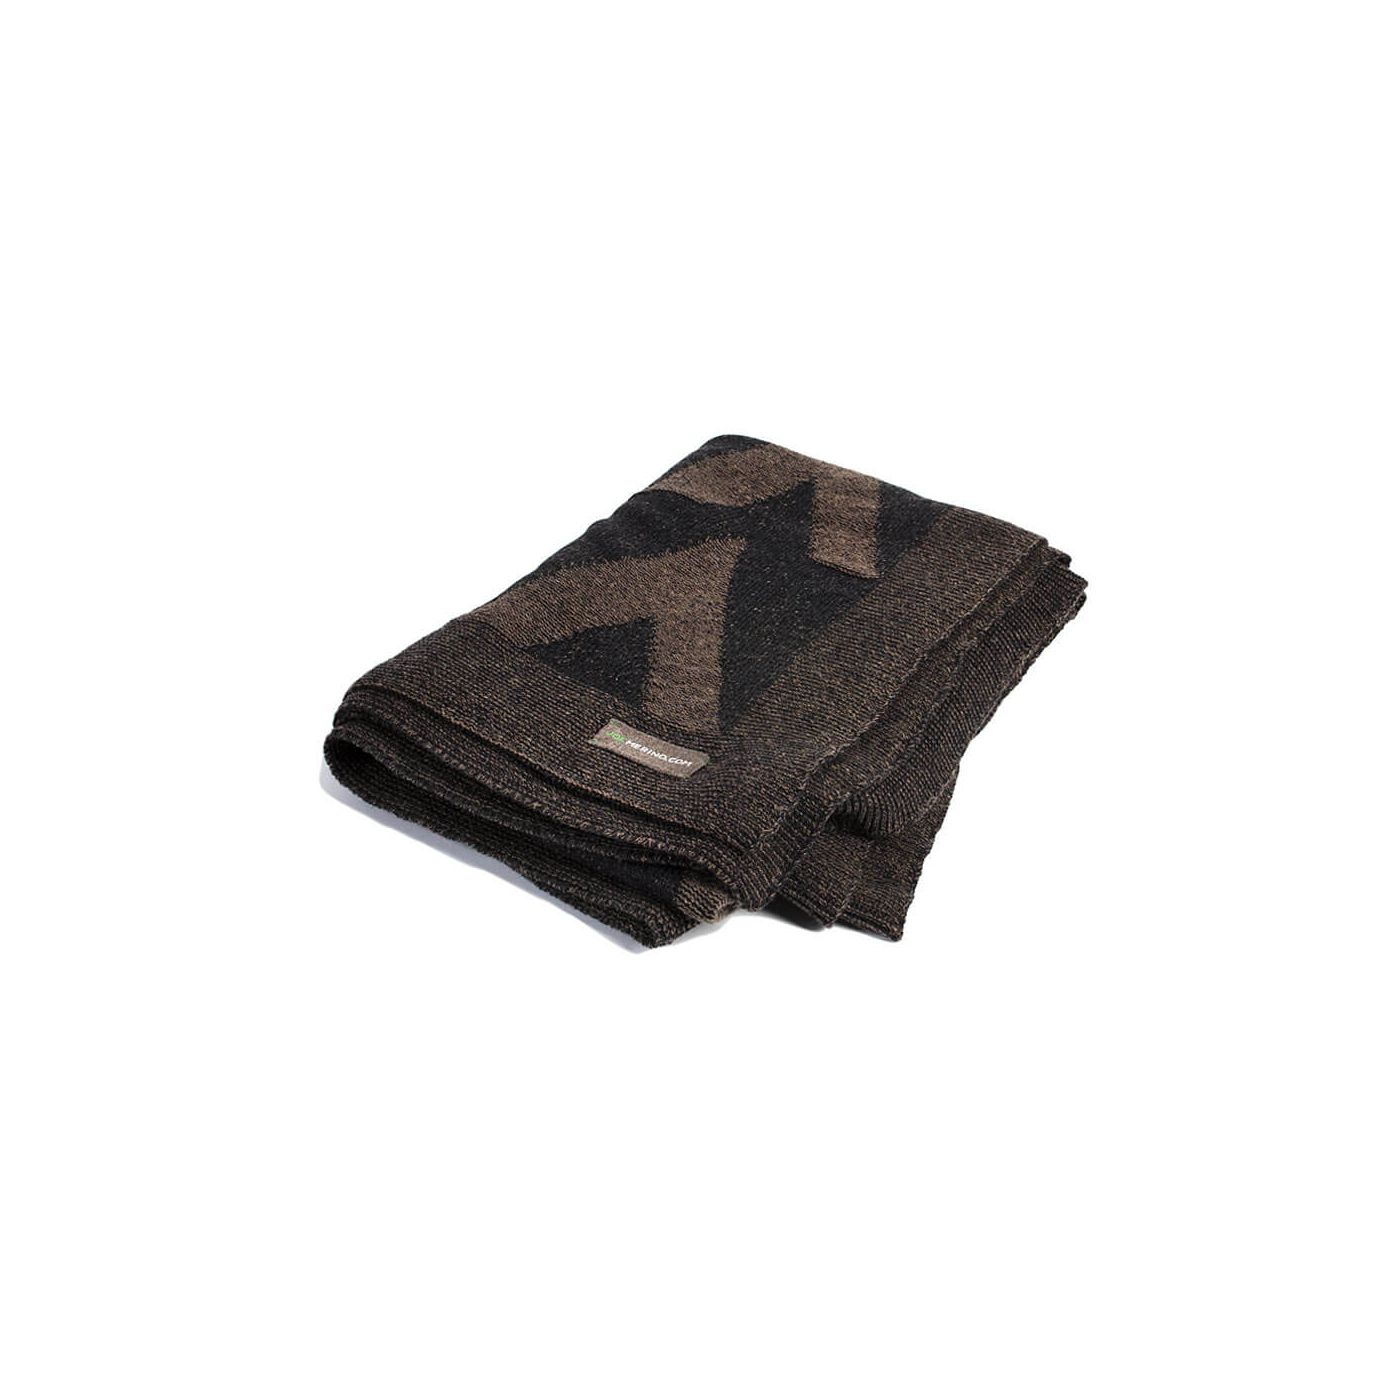 Plaid for men made of Merino wool in Dark brown